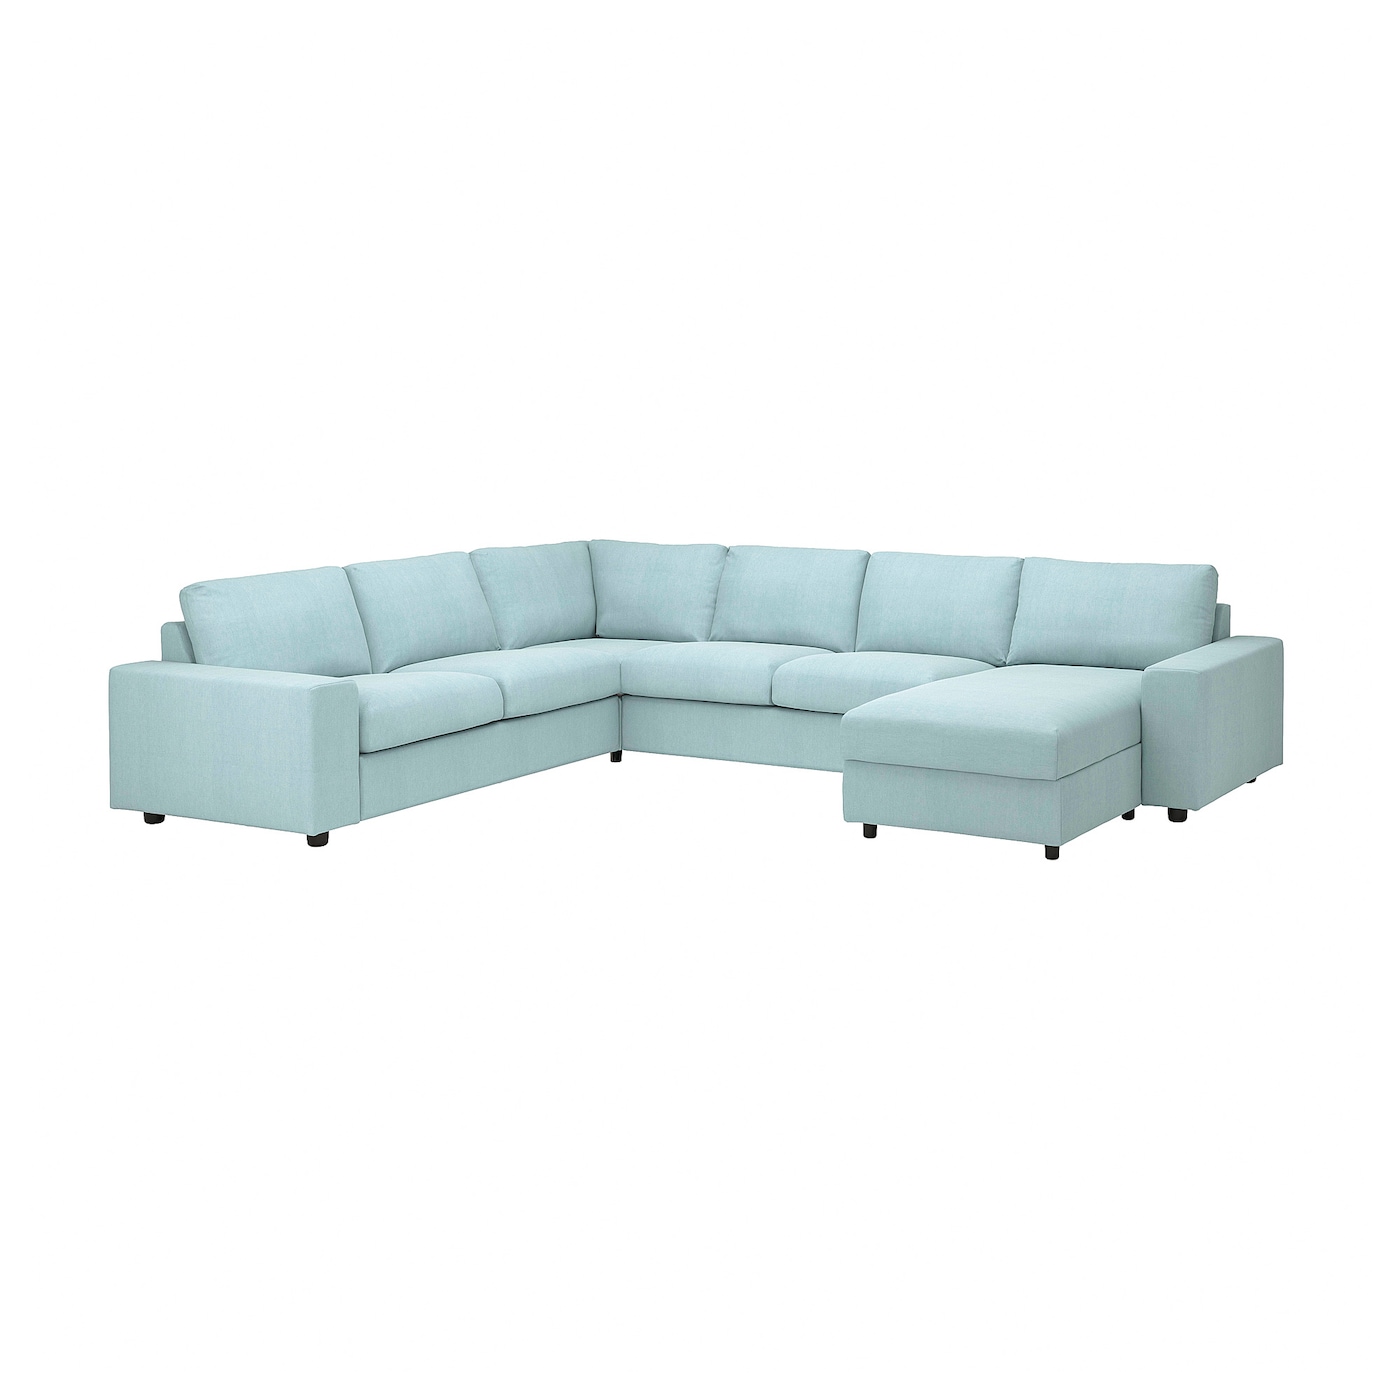 ВИМЛЕ Диван угловой, 5-местный. диван+диван, с широкими подлокотниками/Саксемара светло-синий VIMLE IKEA диван угловой bizzotto 0662861